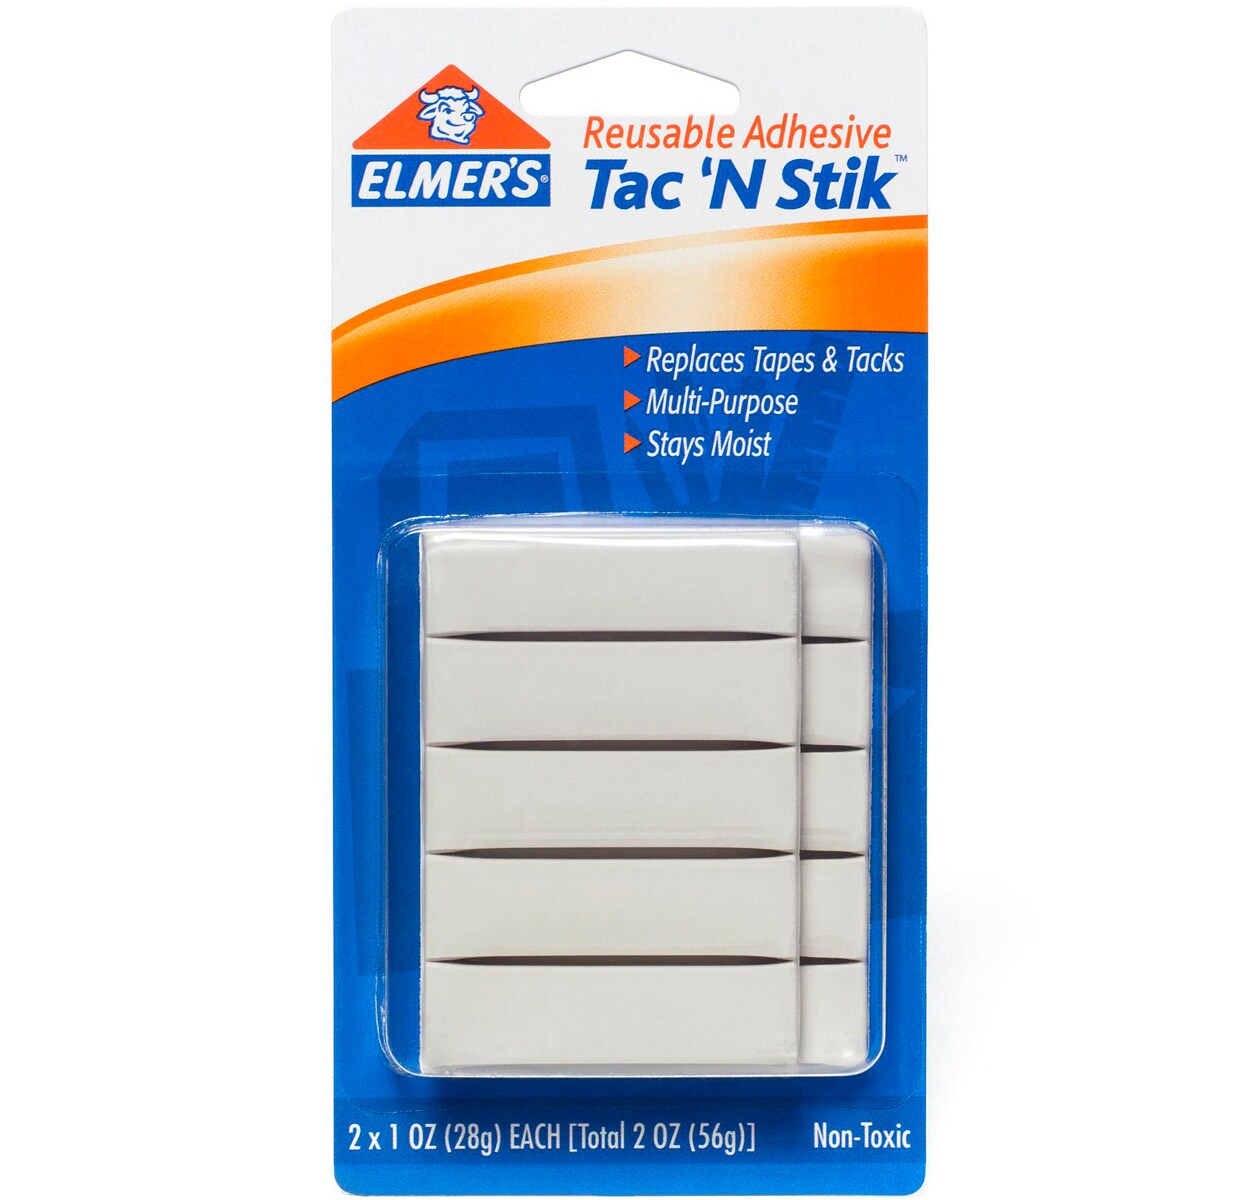 Elmer's Tac 'n Stik Reusable Adhesive Putty 2oz